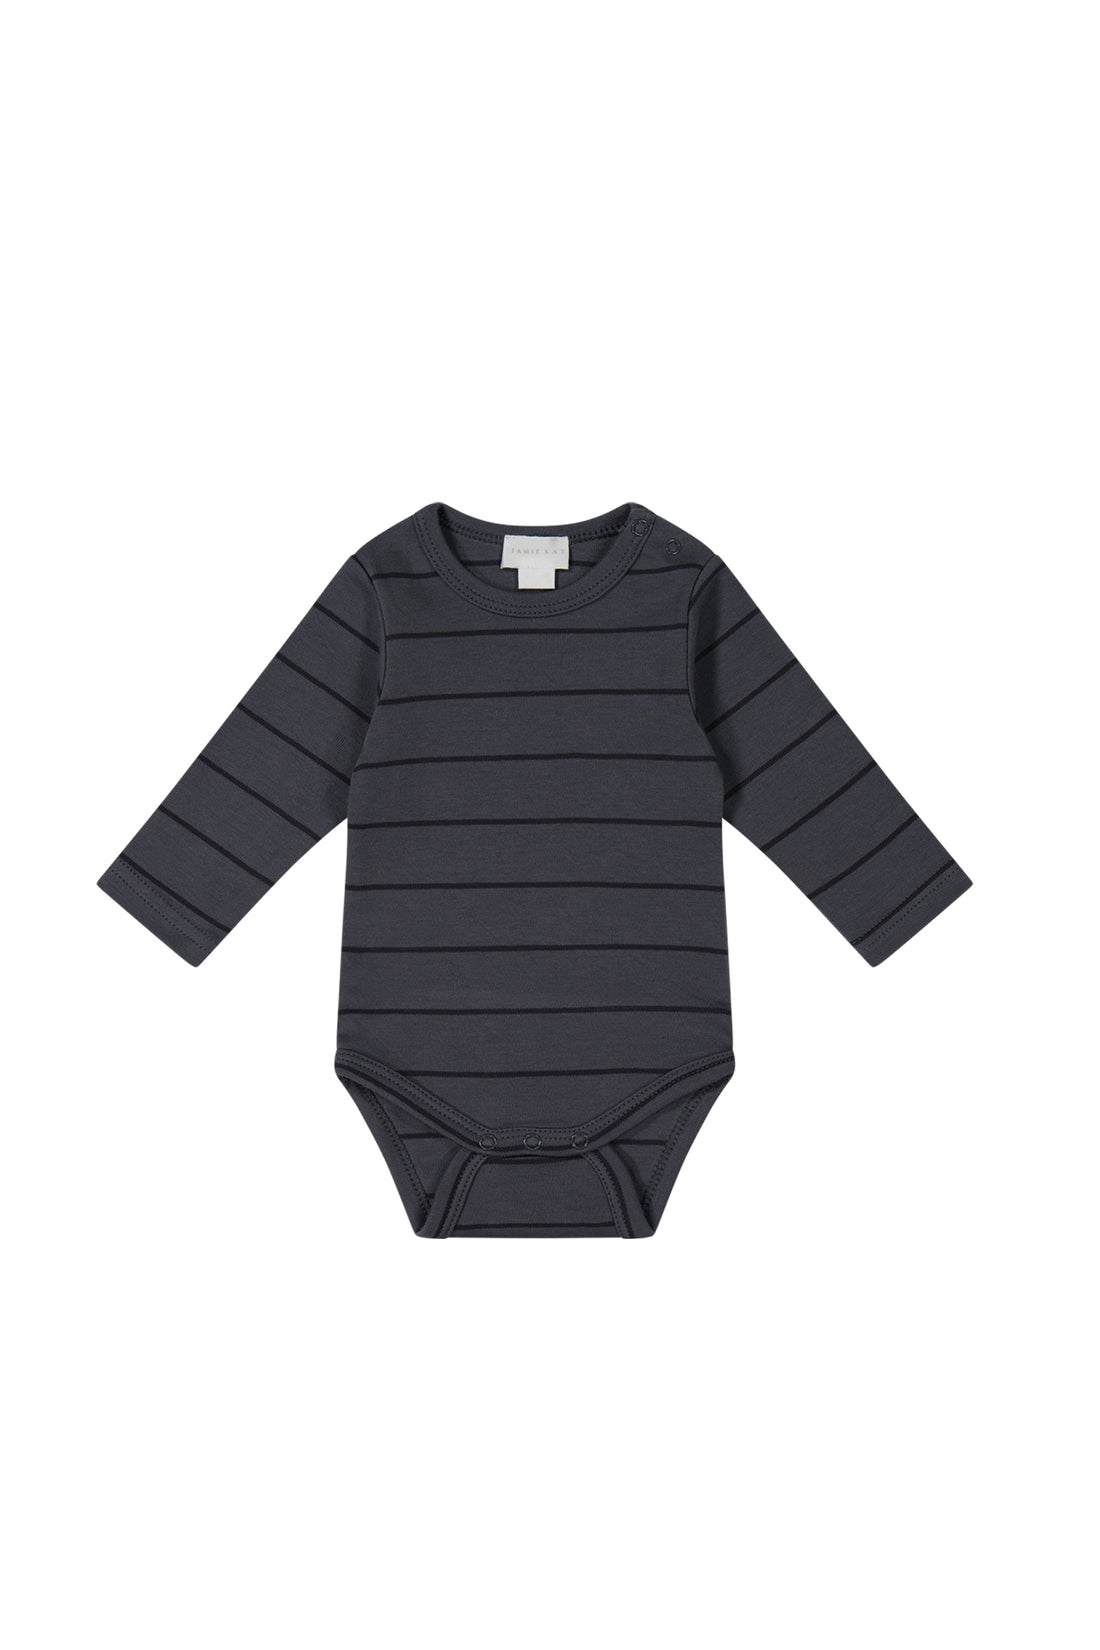 Pima Cotton Fernley Long Sleeve Bodysuit - Lava Smoke/Solar System Stripe Childrens Bodysuit from Jamie Kay NZ